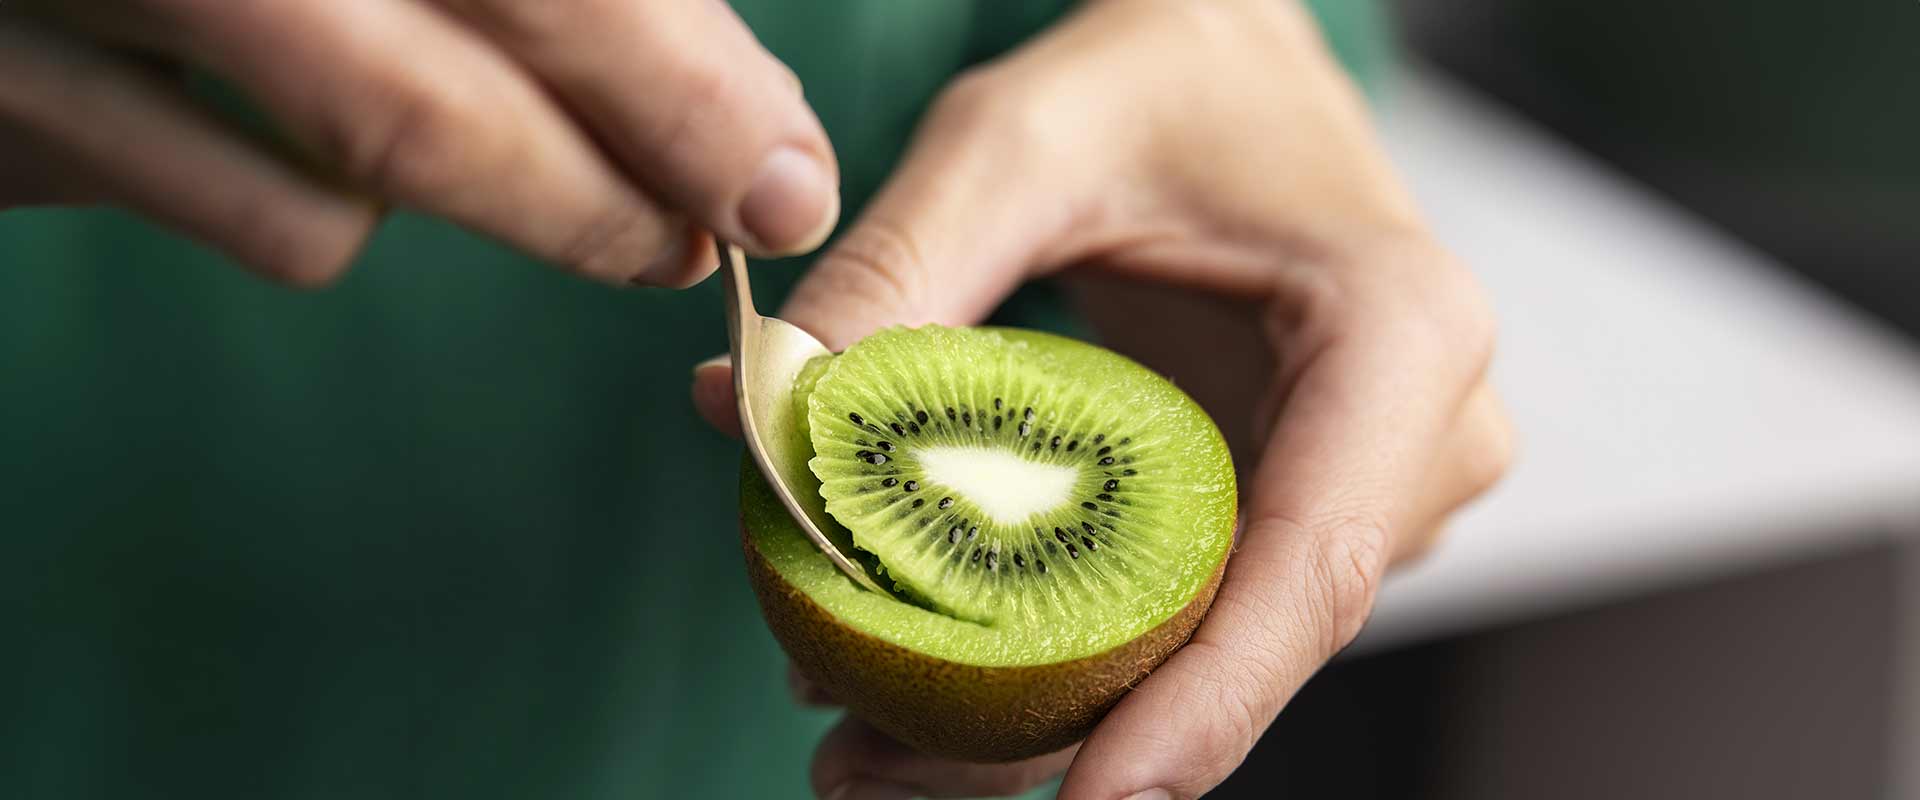 Kiwifruit: a Natural Alternative to Laxatives - Thumbanail